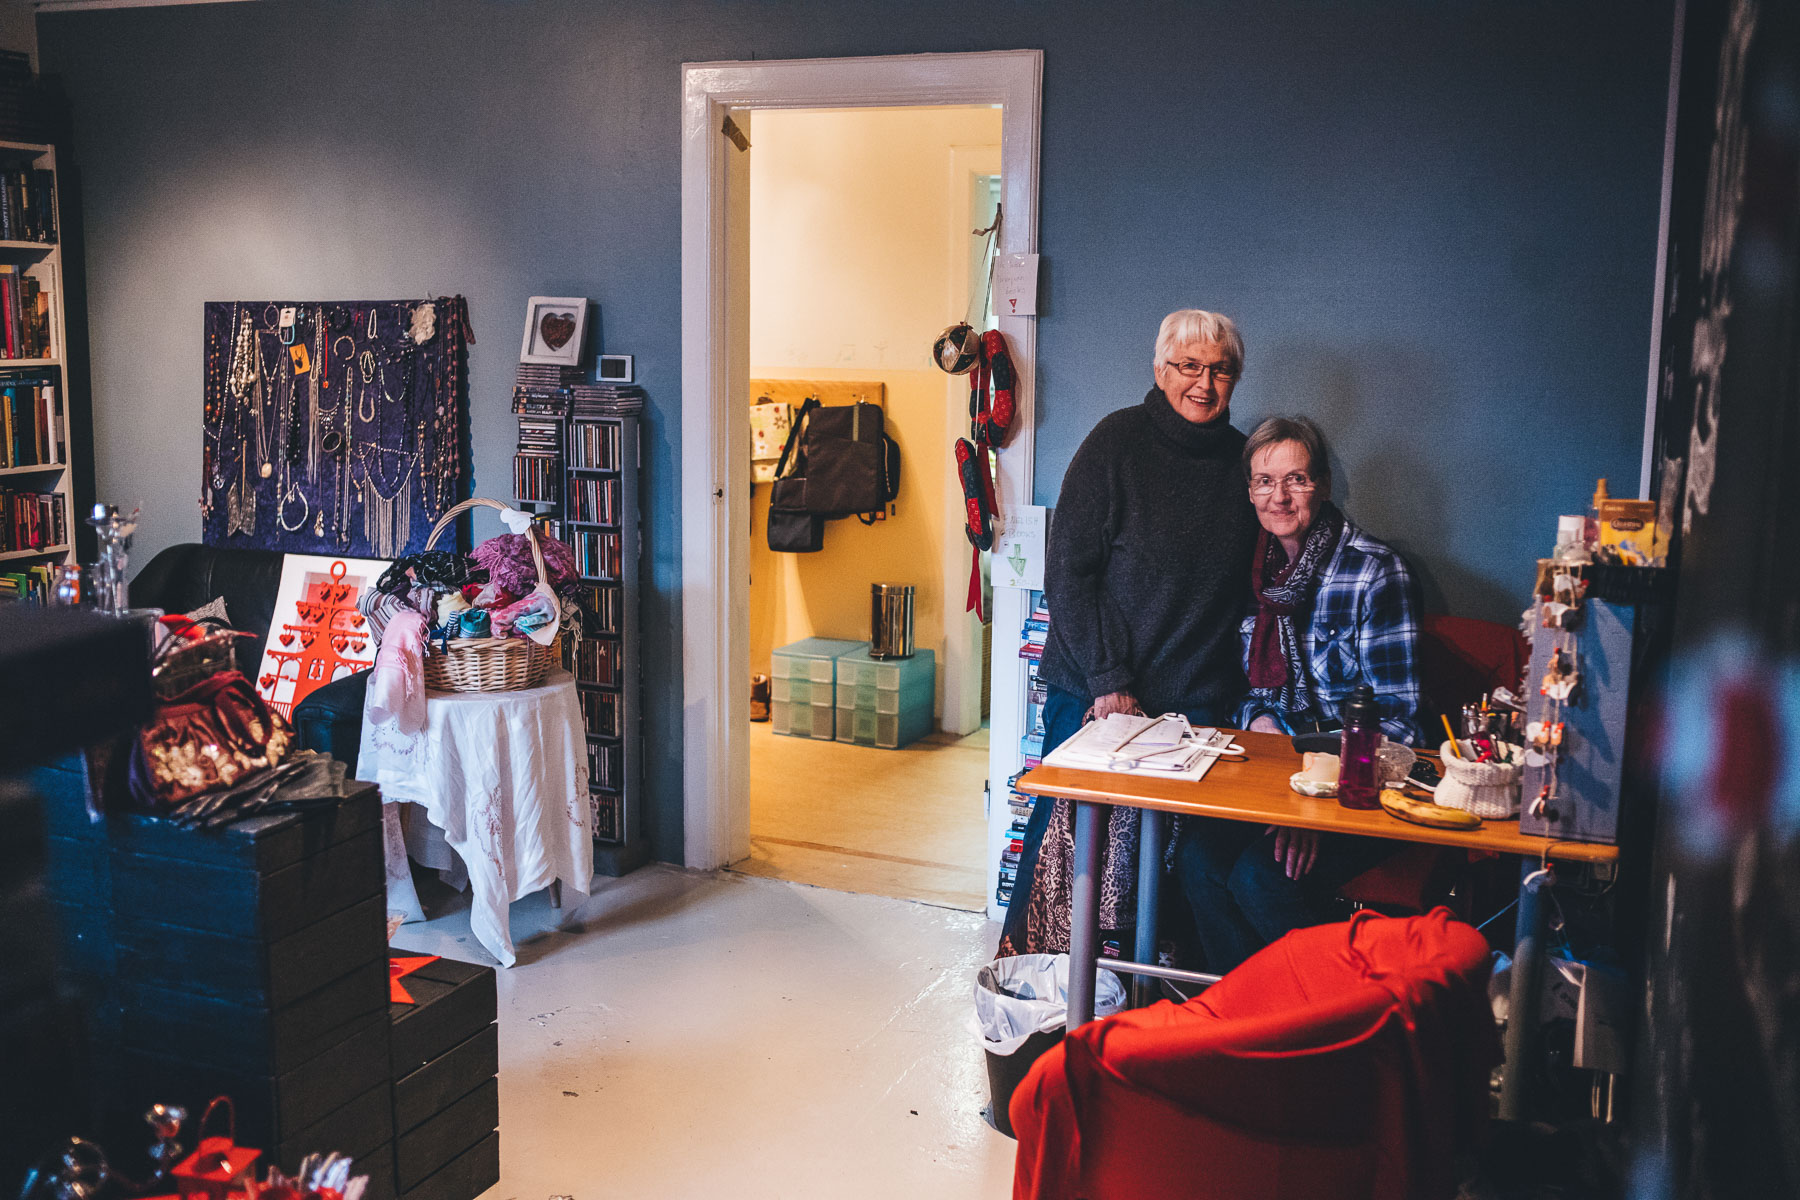 charity shop workers in reykjavik